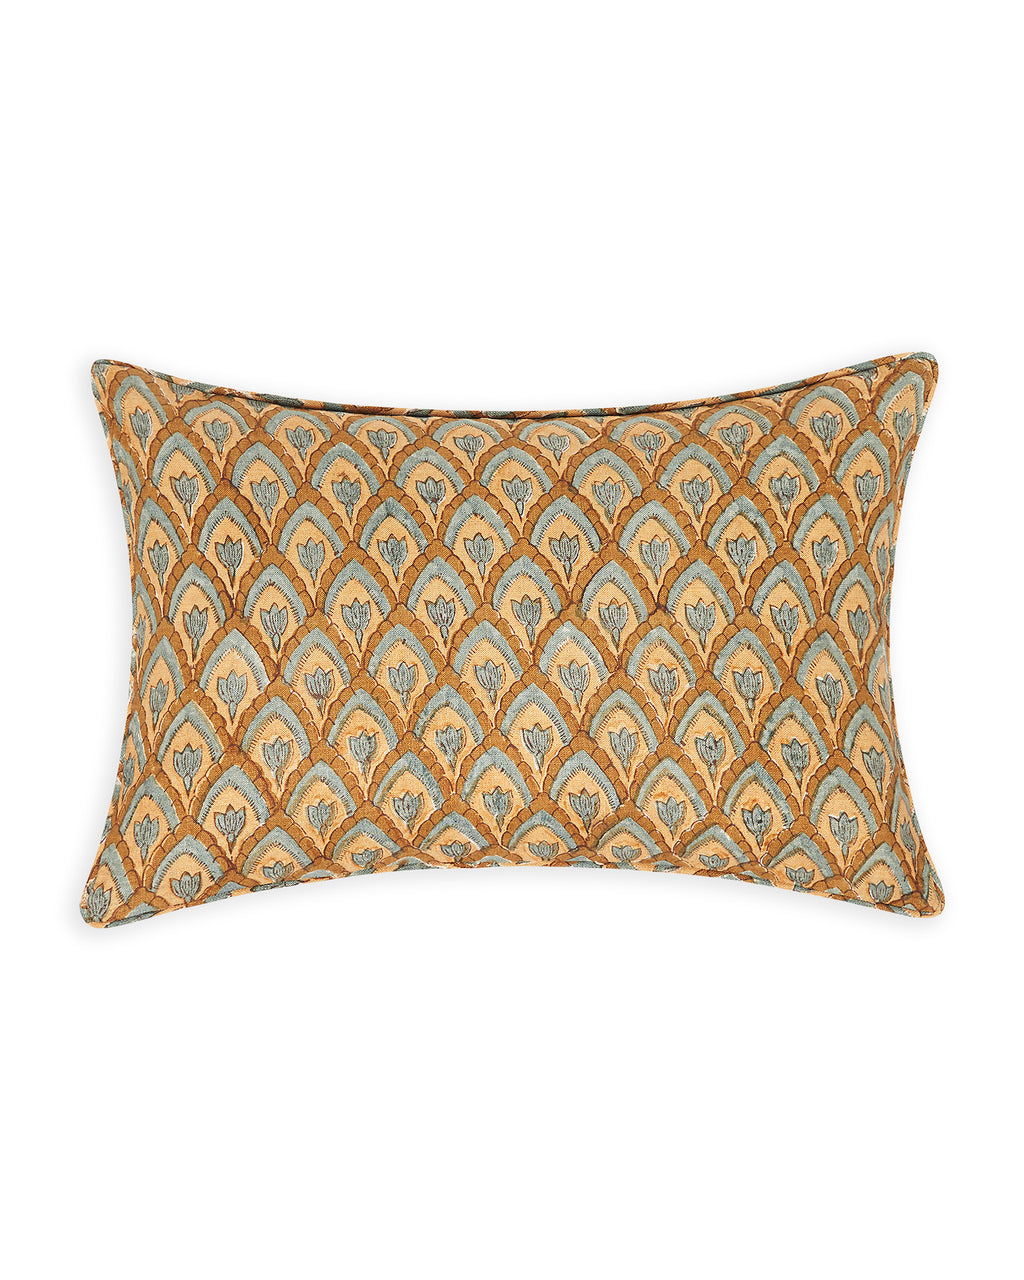 Haveli Egypt linen cushion 30x45cm